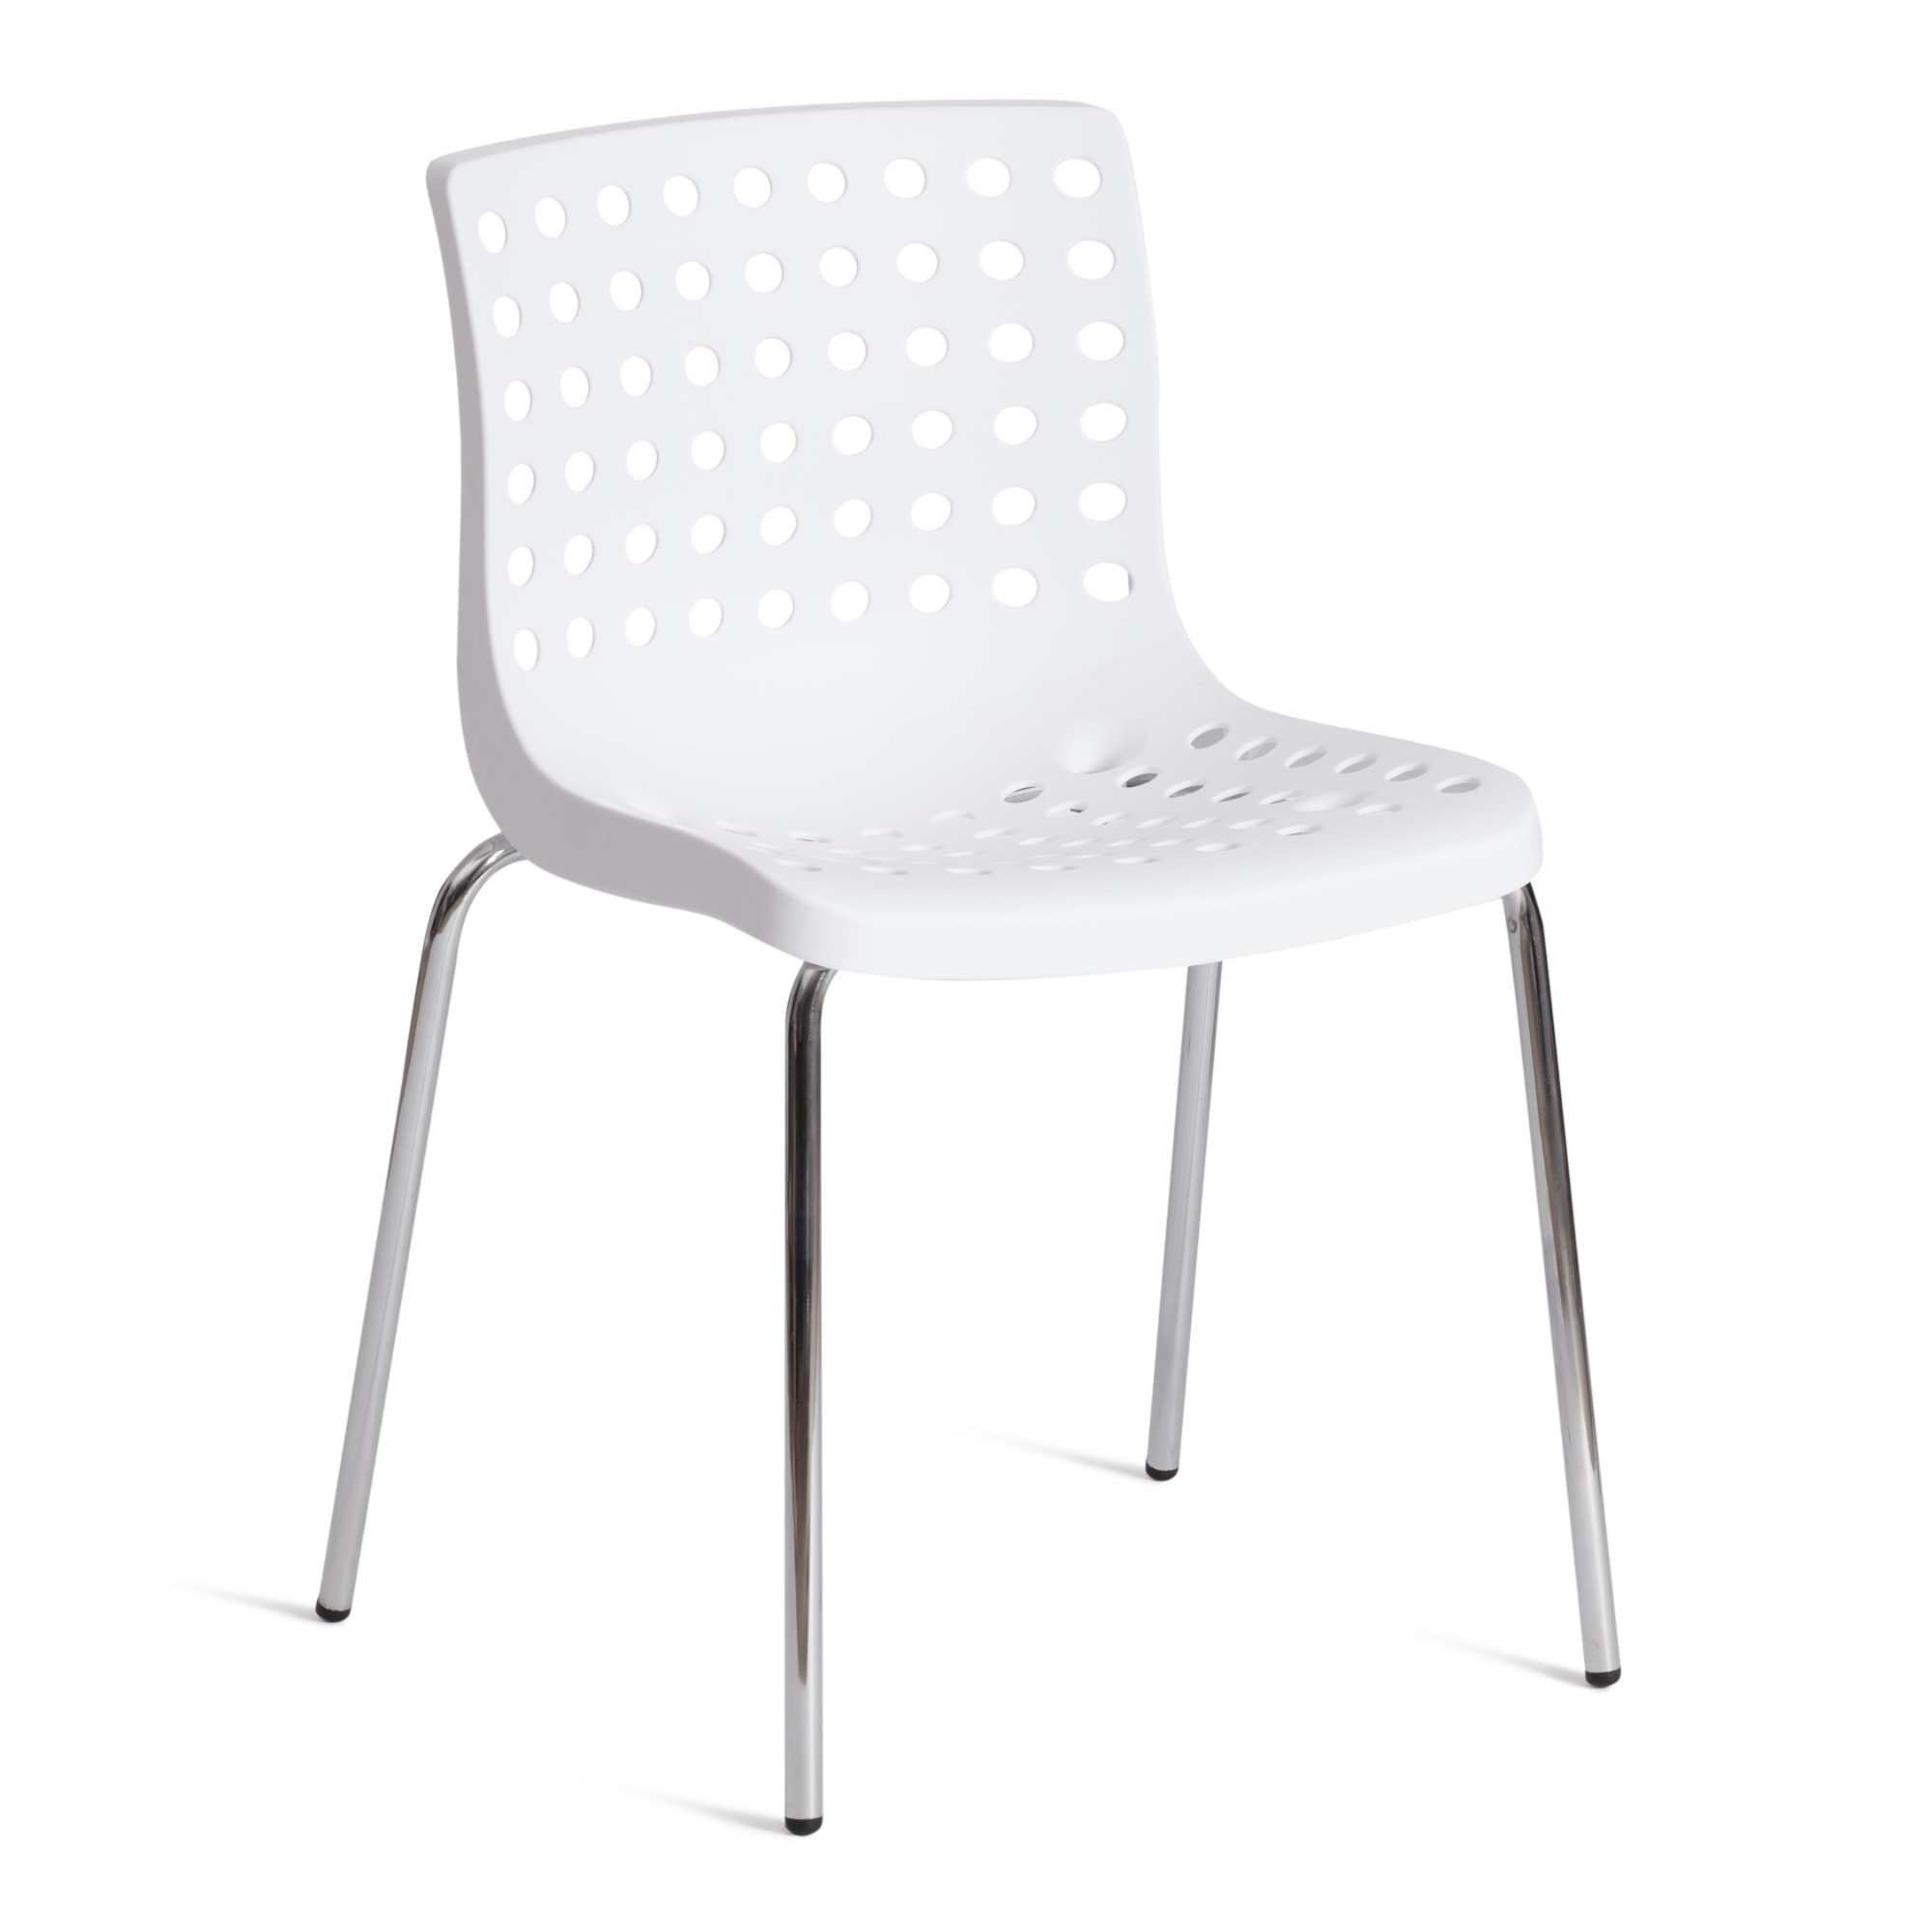 Стул ТС Skalberg пластиковый белый с хромированными ножками 46х56х79 см стул тс cindy chair пластиковый с ножками из бука белый 45х51х82 см